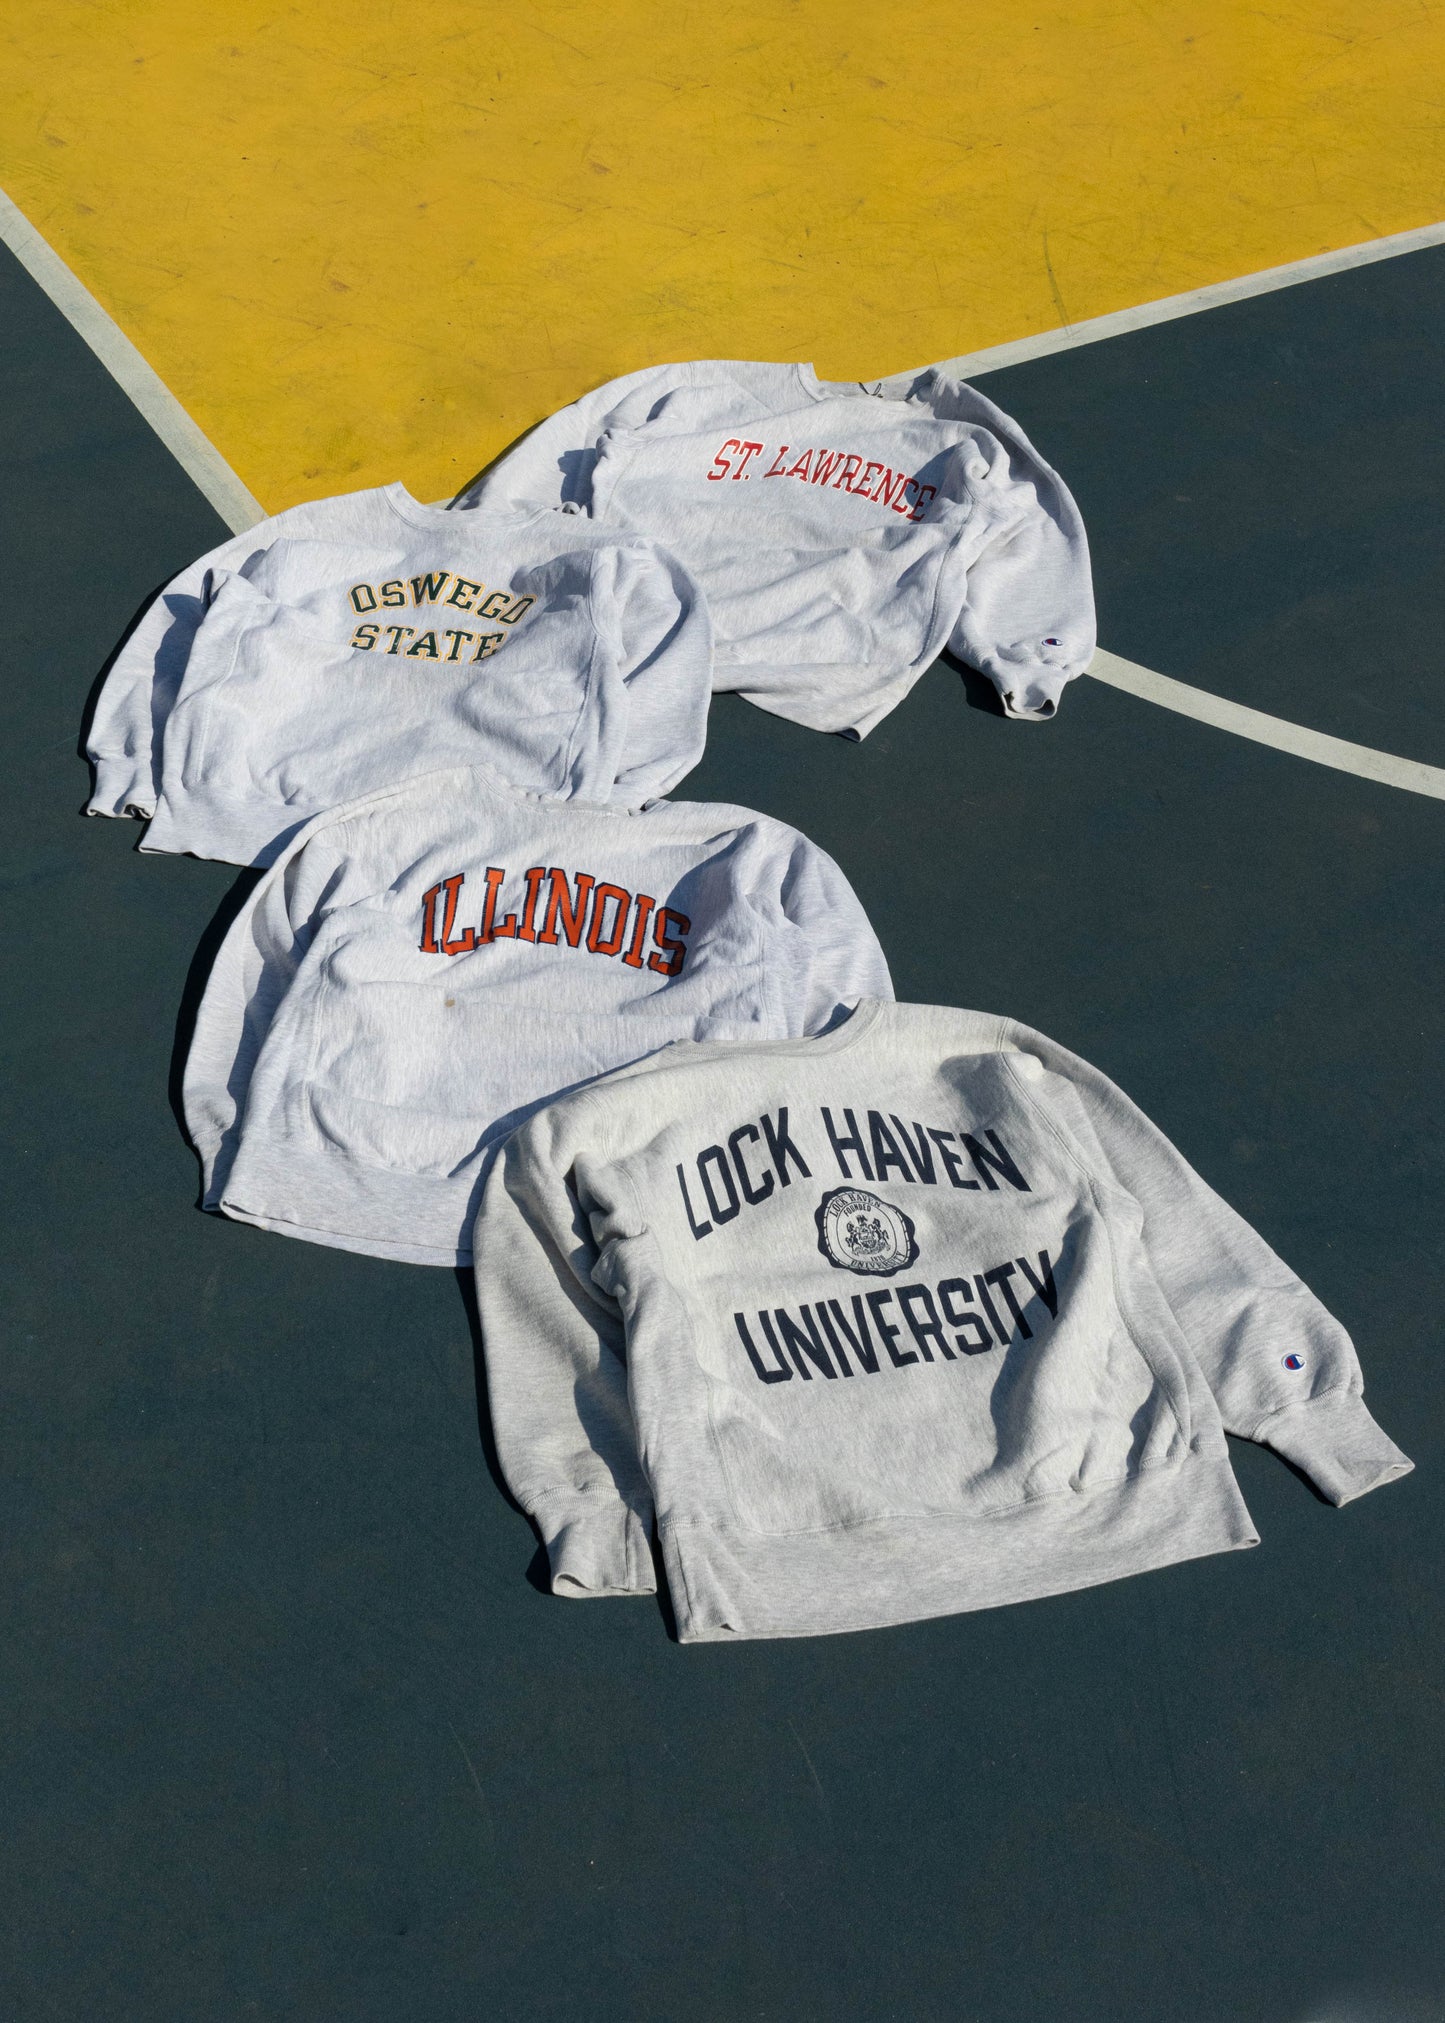 Vintage 1980s Champion Reverse Weave Warmup Lock Haven University Sweatshirt Size S/M